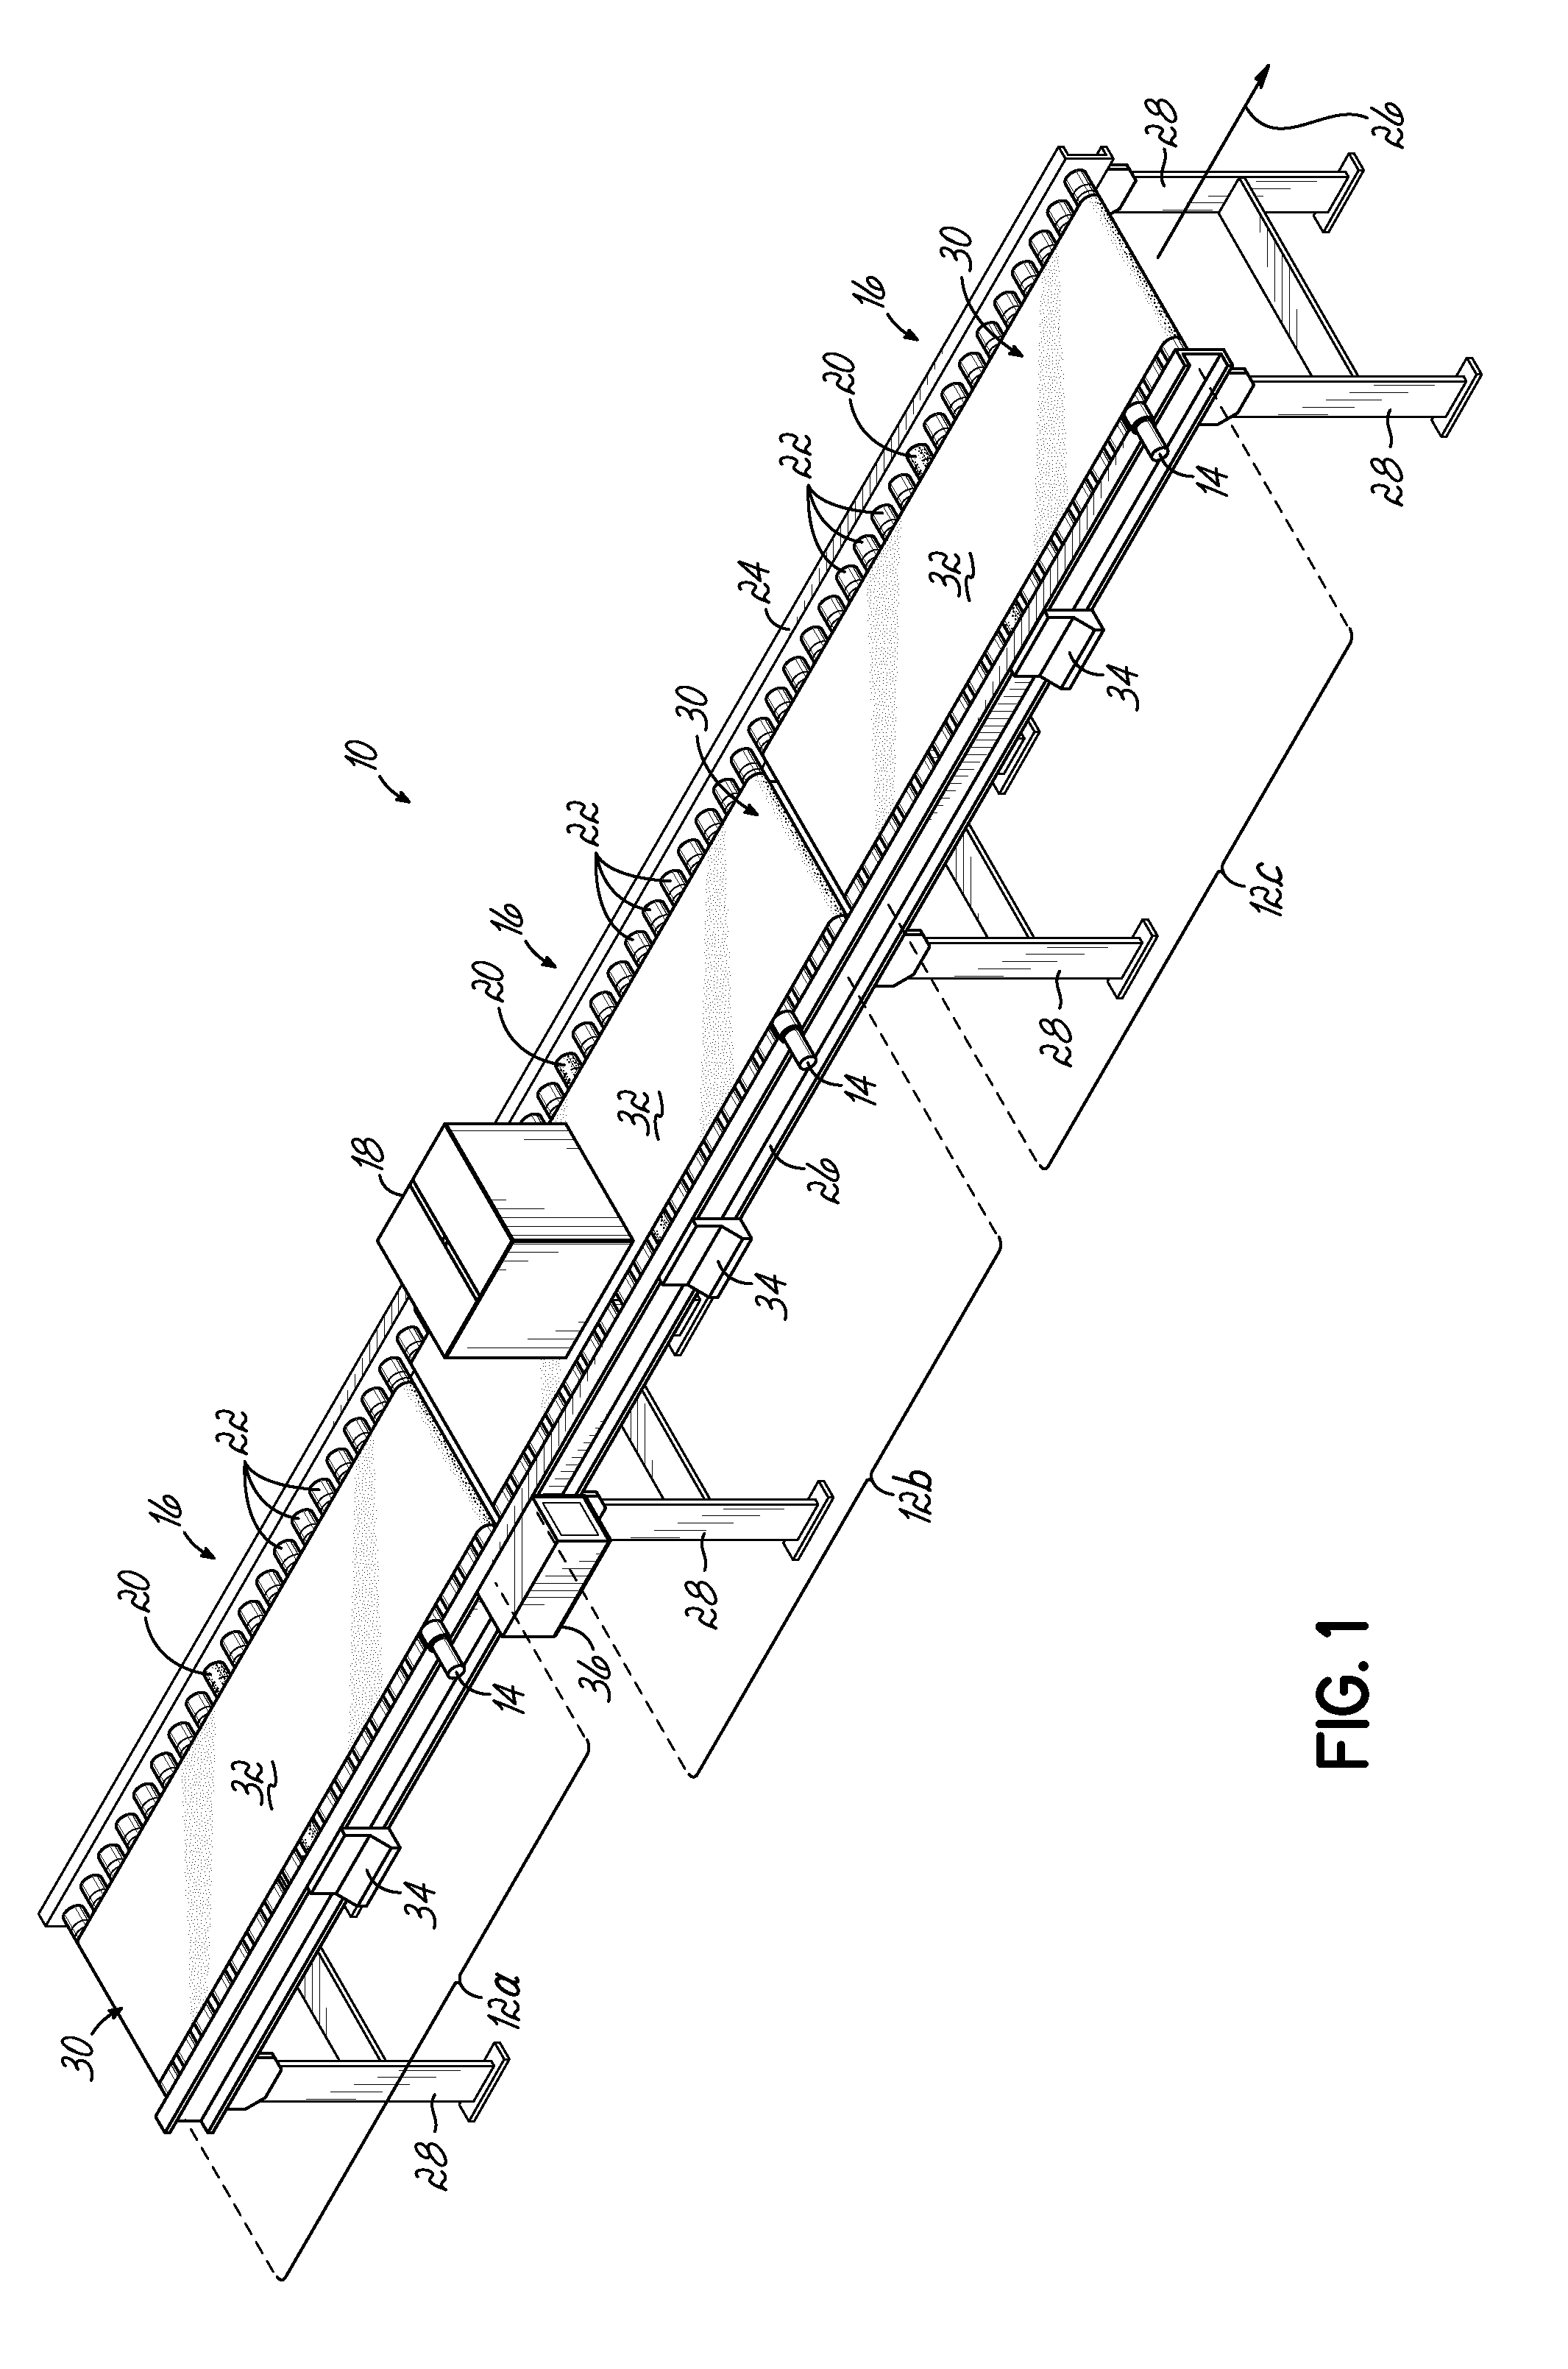 Zone Controller For Modular Conveyor System